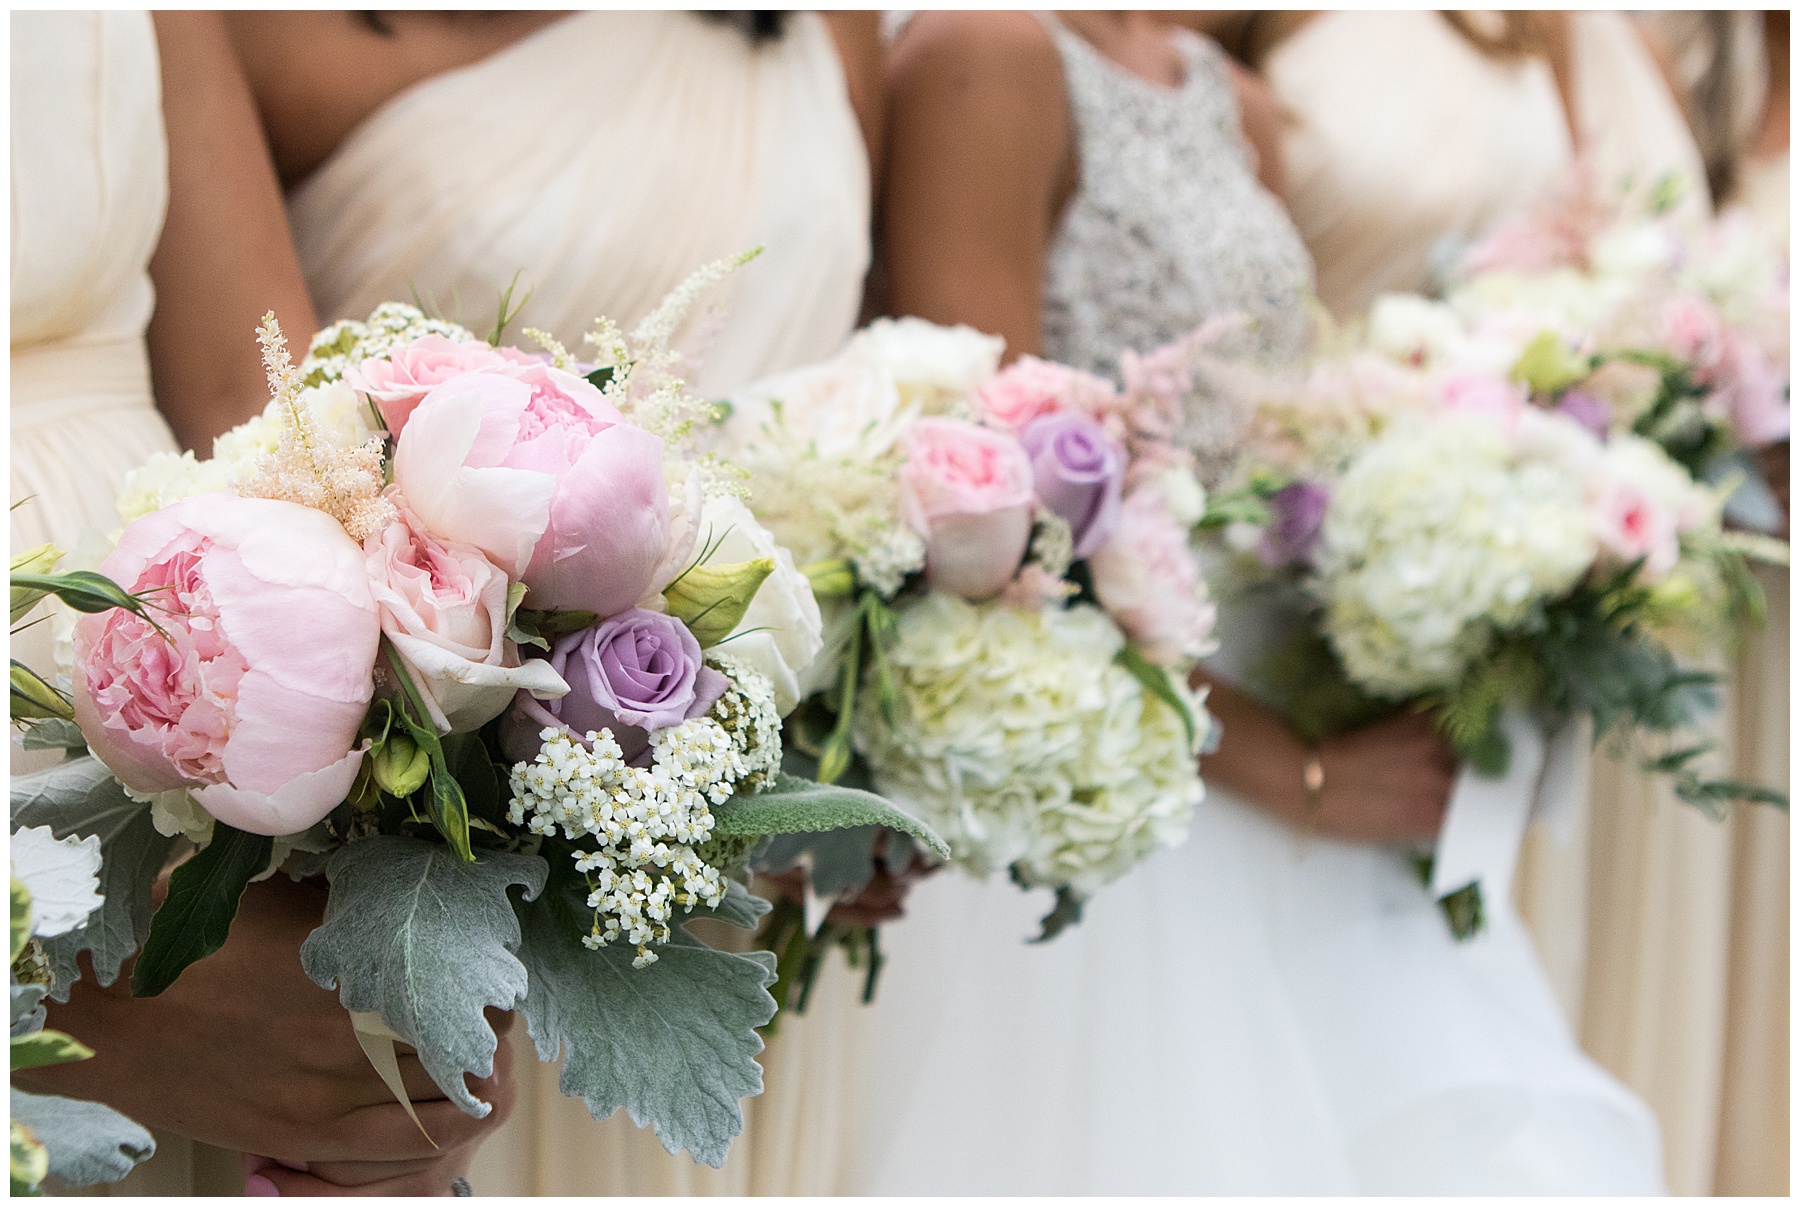 Detail of wedding flowers